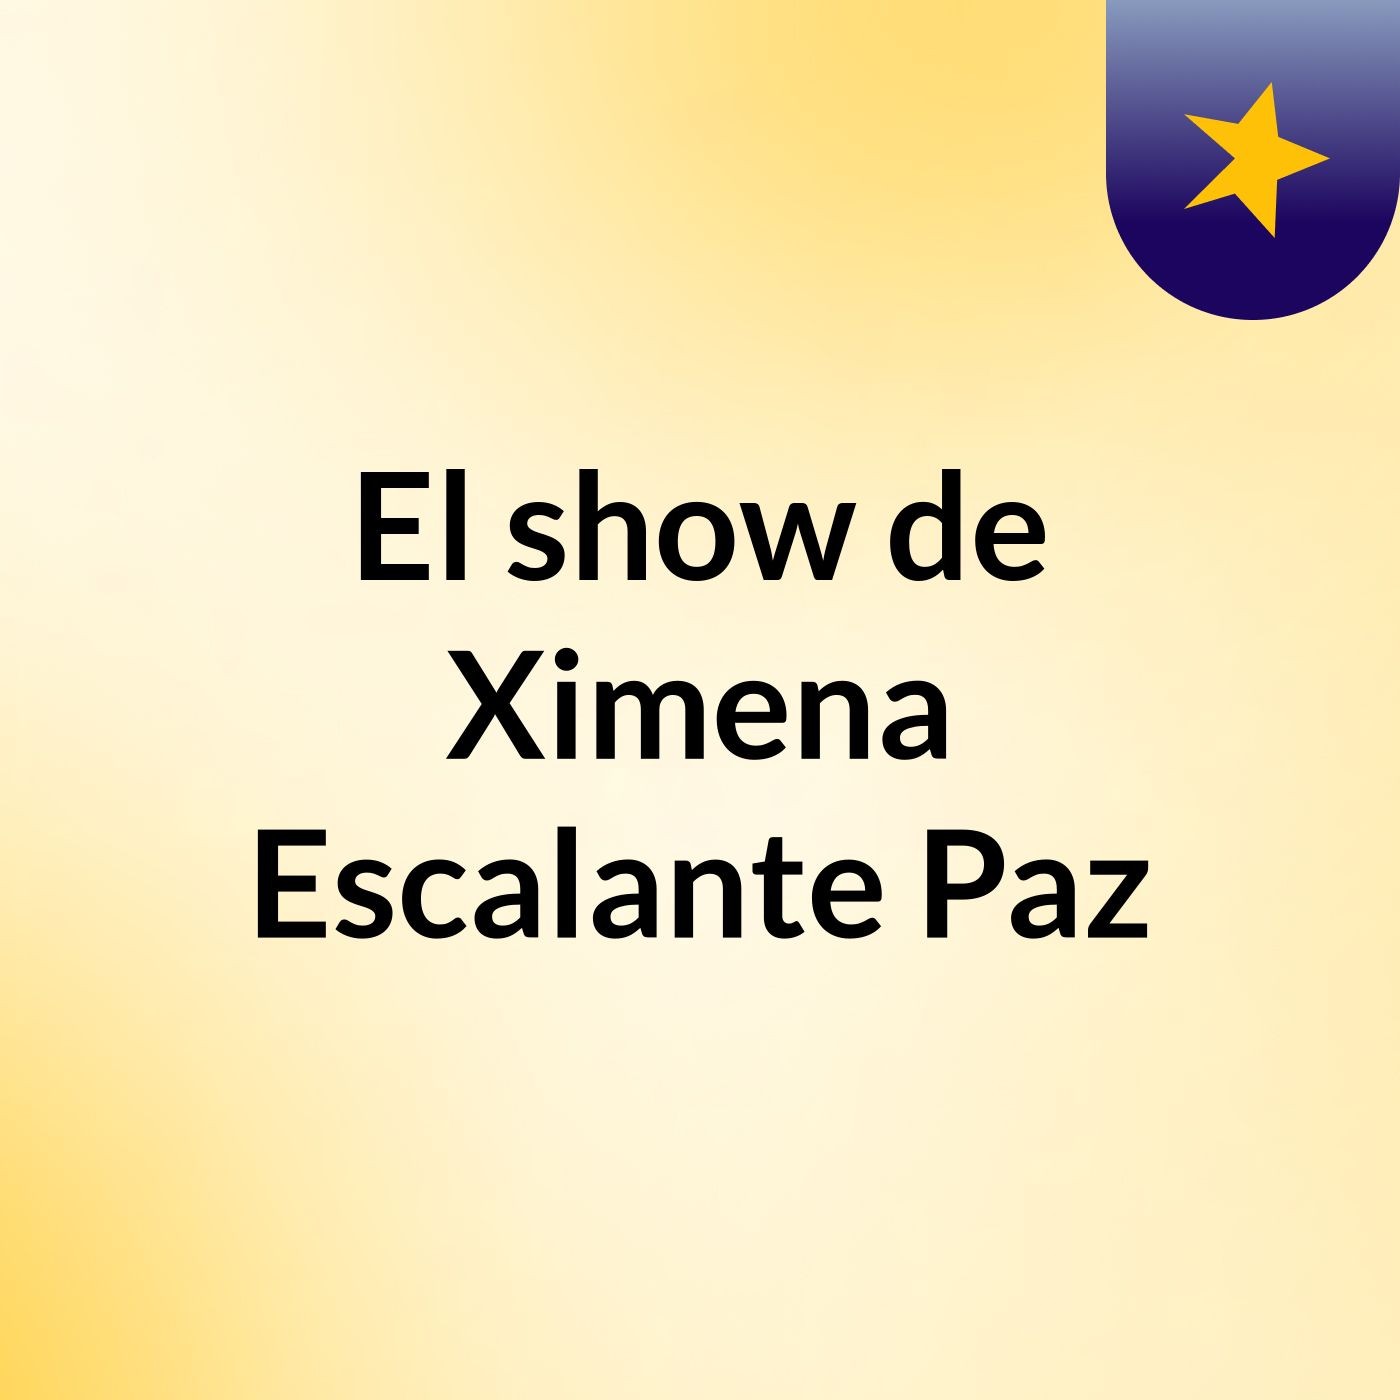 El show de Ximena Escalante Paz